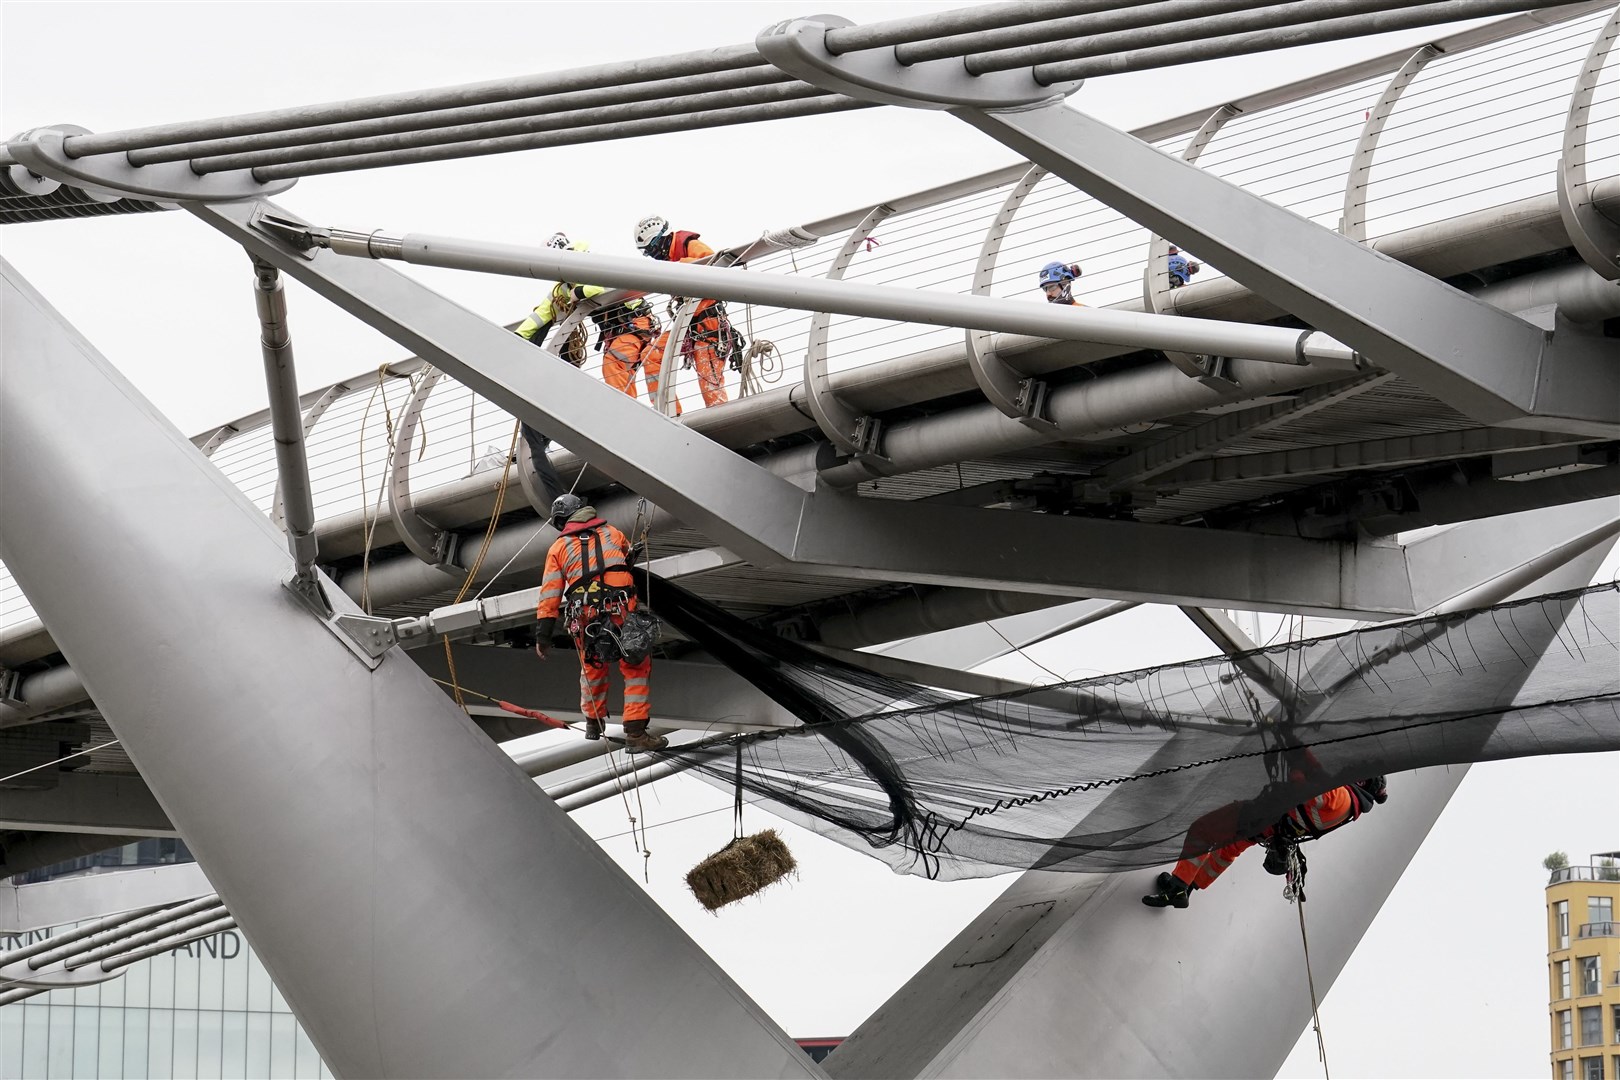 A straw bale is suspended from London’s Millennium Bridge as work is undertaken on the structure (Jordan Pettitt/PA)